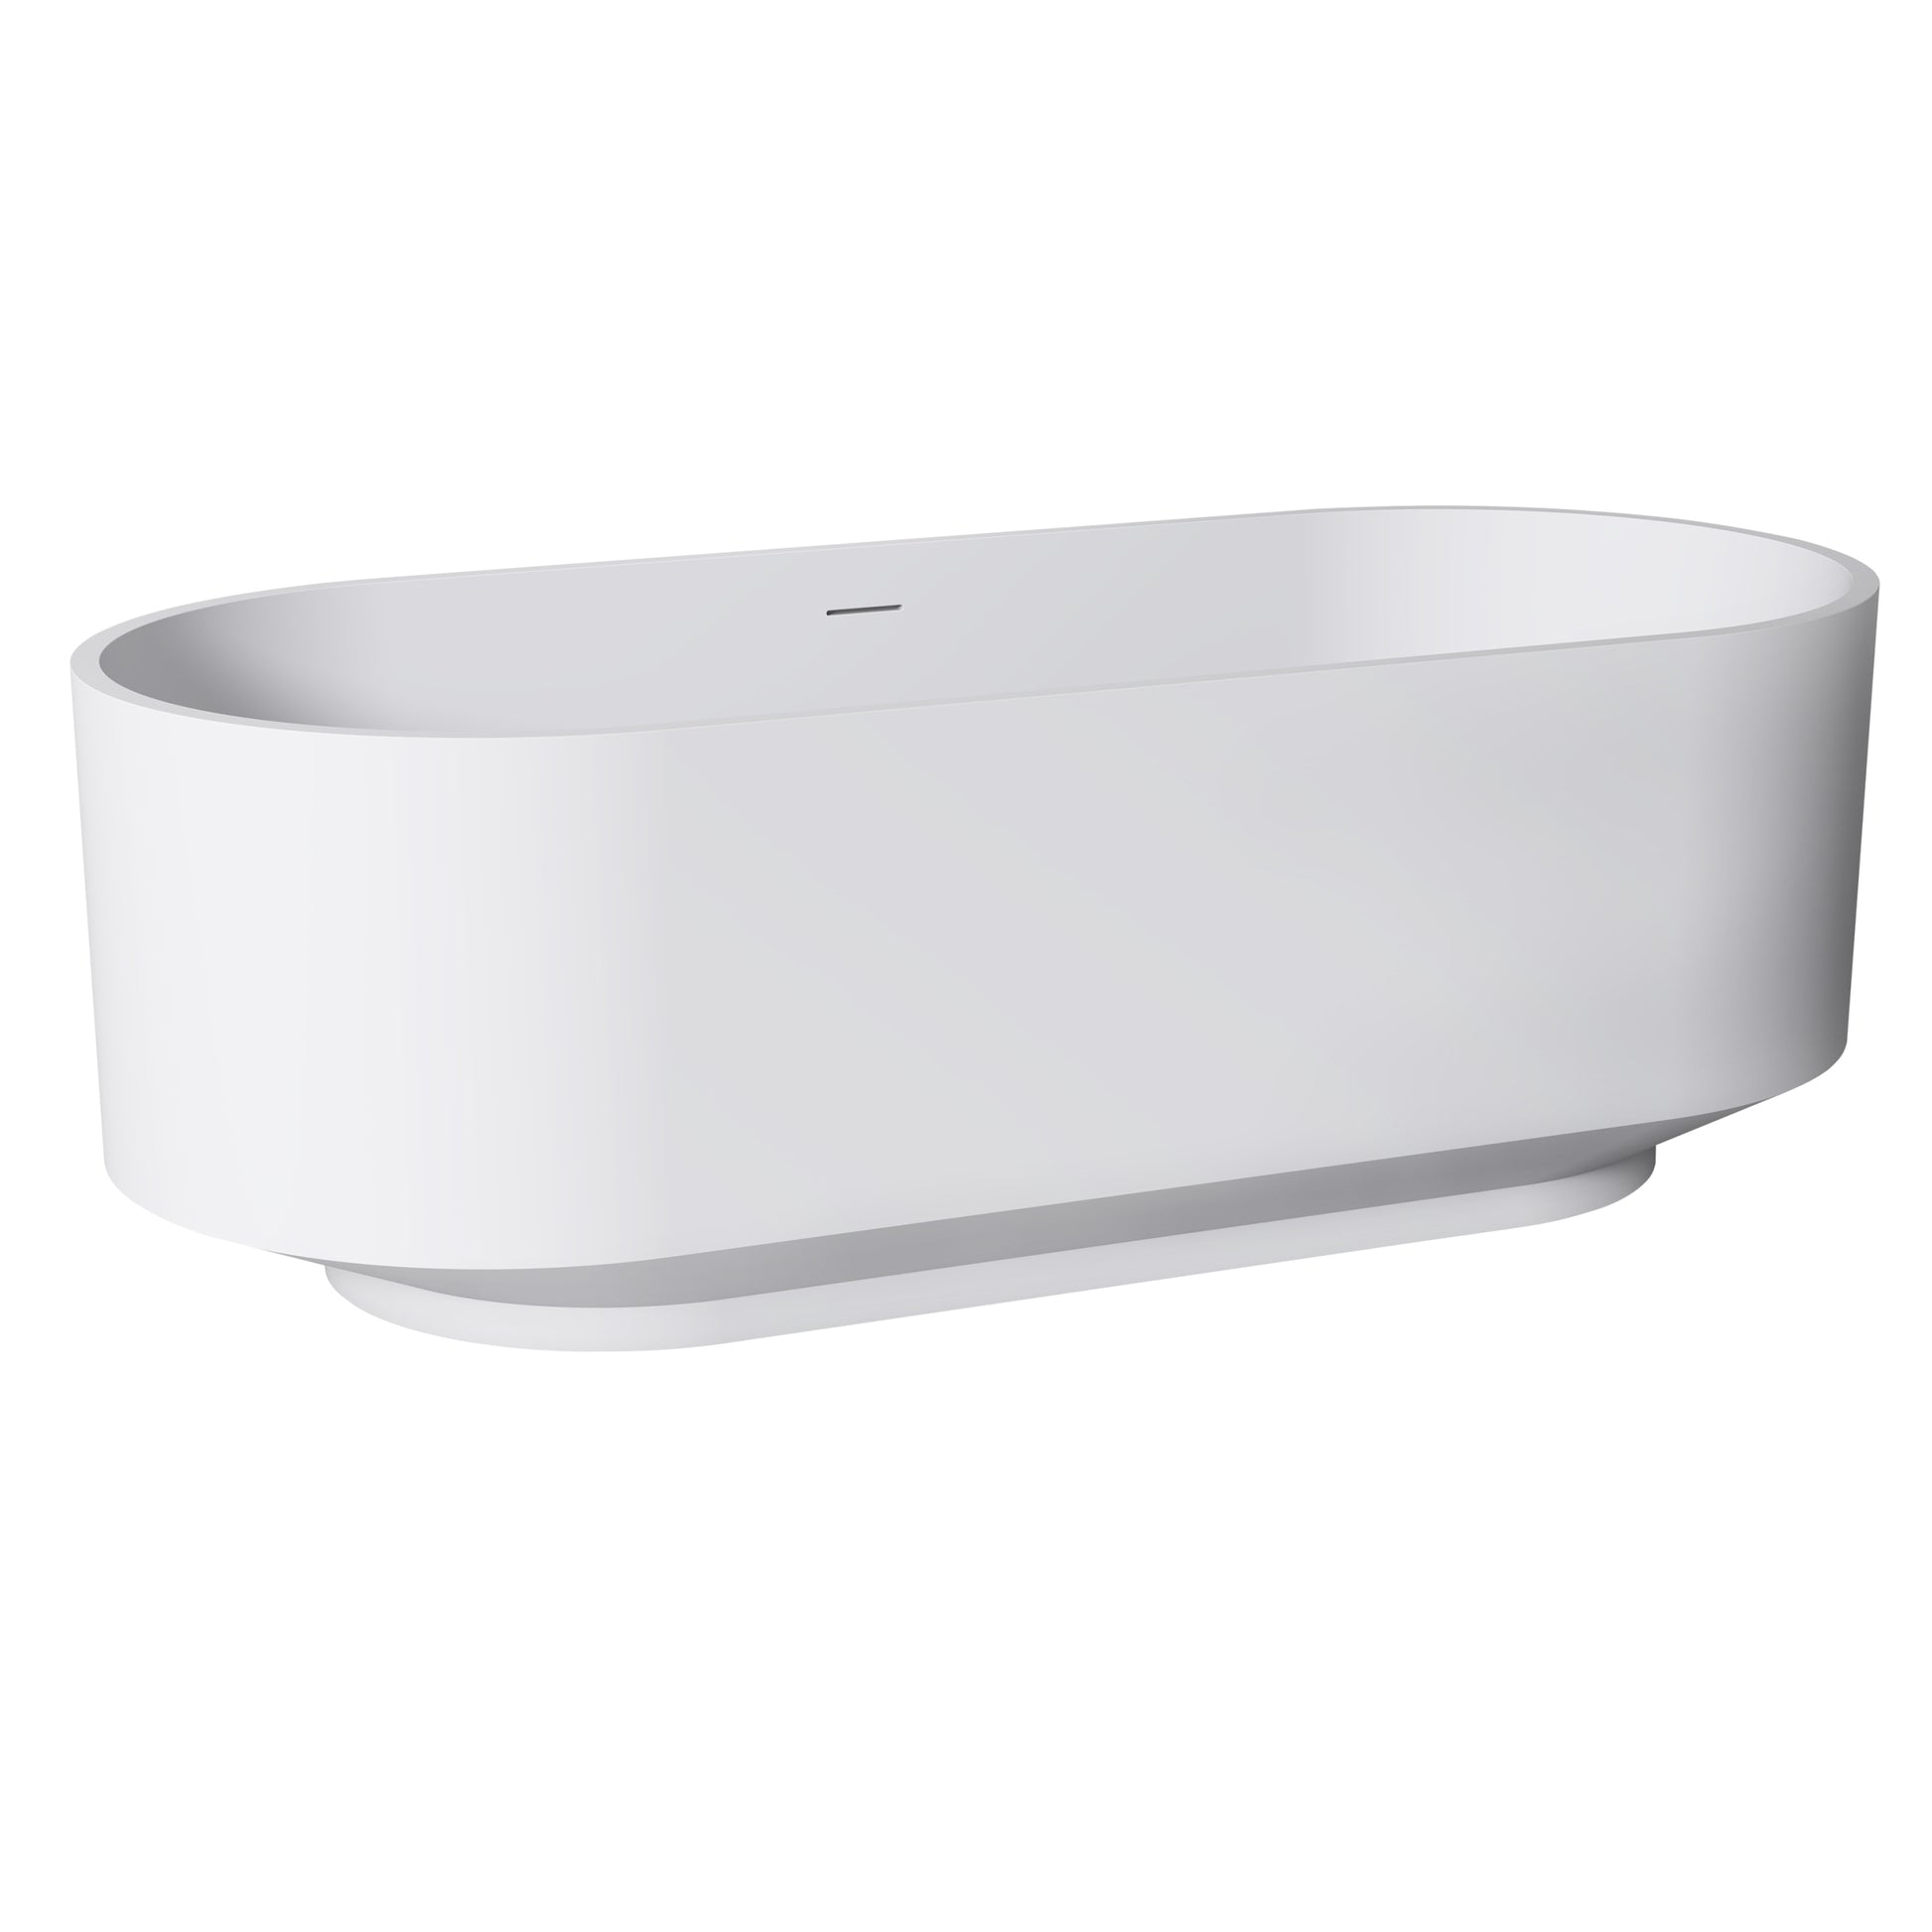 Solid surface bathtub matt white white-solid surface